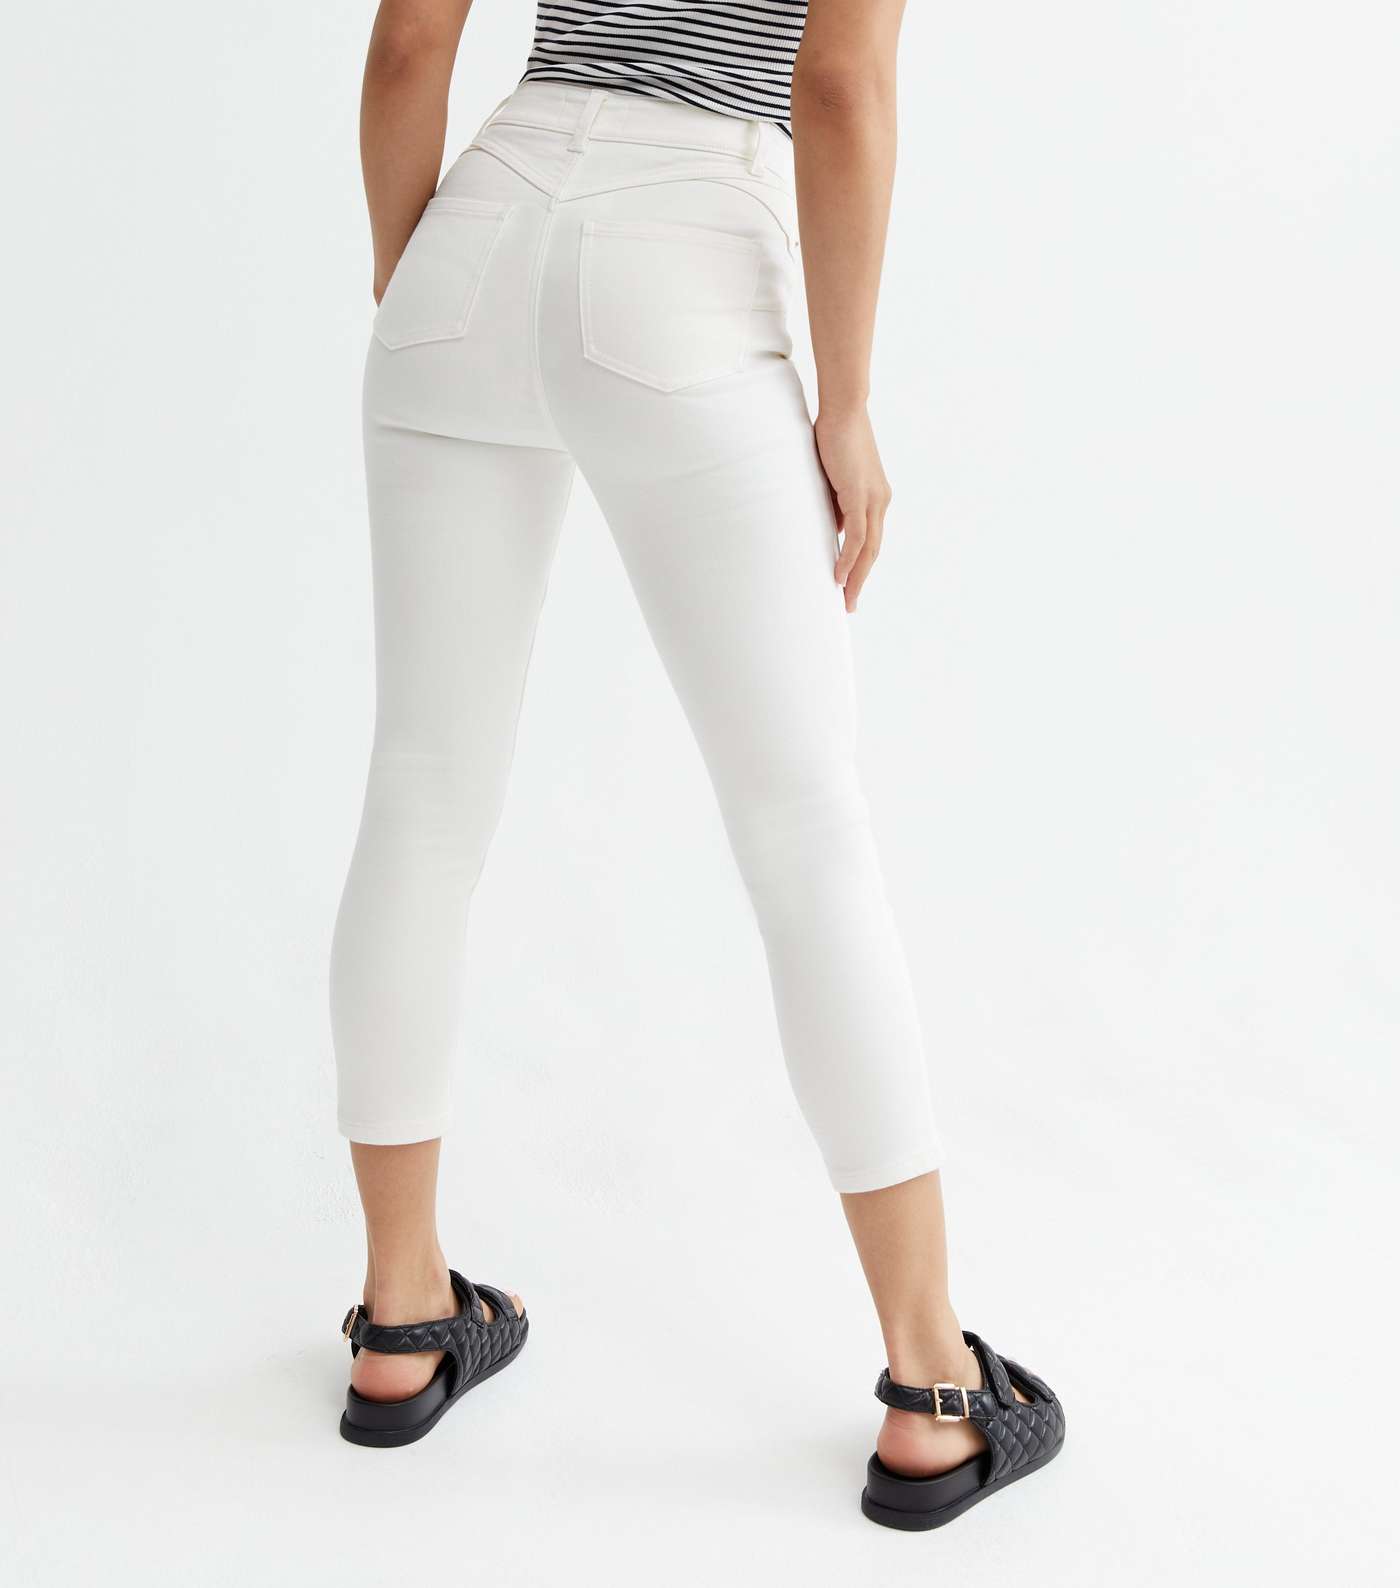 White Crop Lift & Shape Jenna Skinny Jeans Image 4